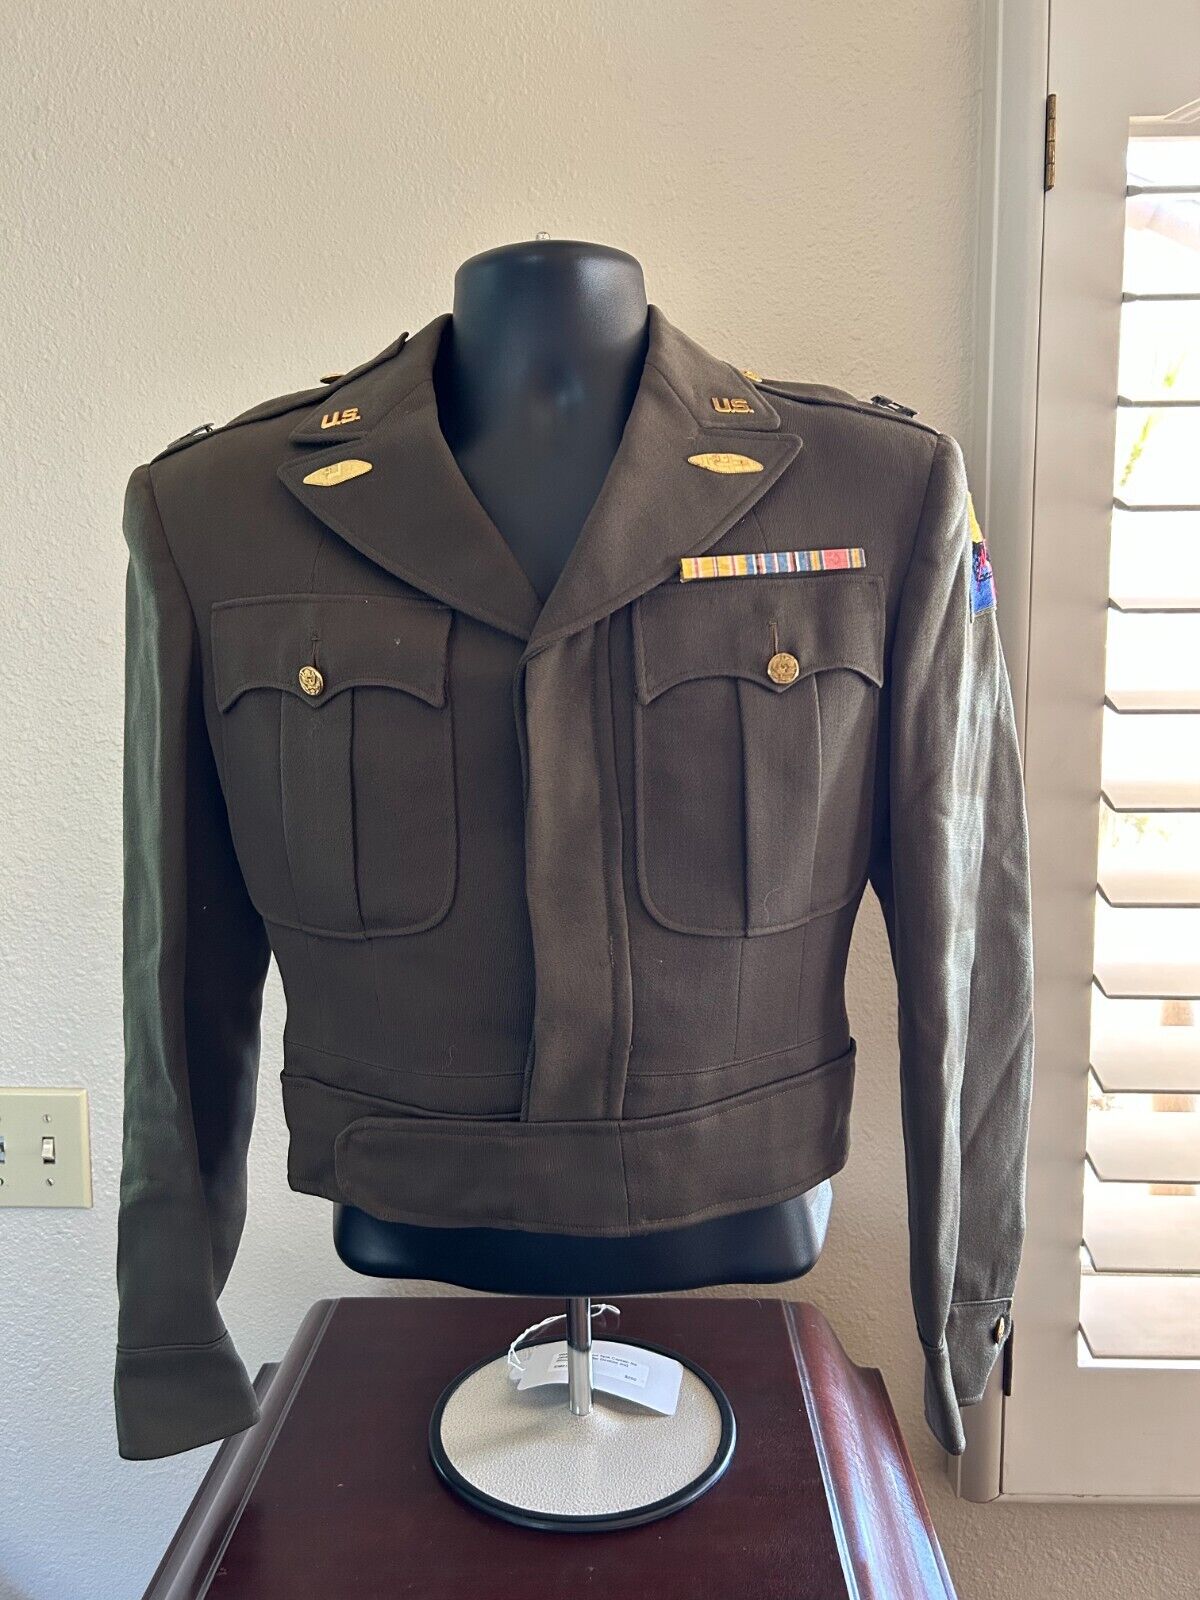 WW2 Era US Army Tank Captains Tunic/Uniform With Bullion Collar Devices